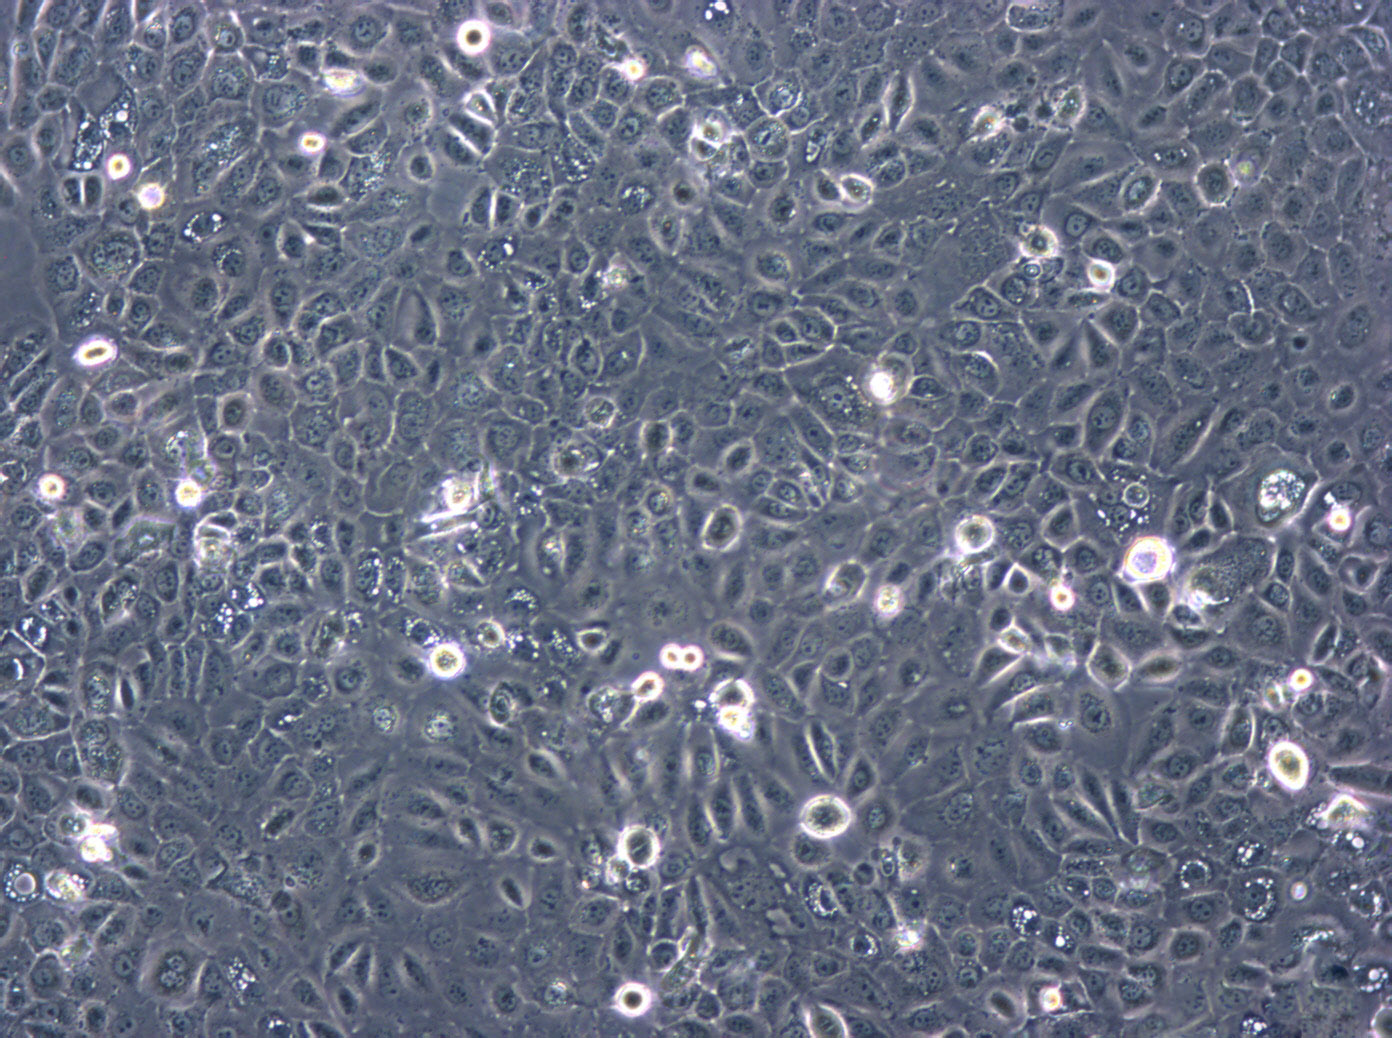 SNU-484 Cells|人胃癌可传代细胞系,SNU-484 Cells